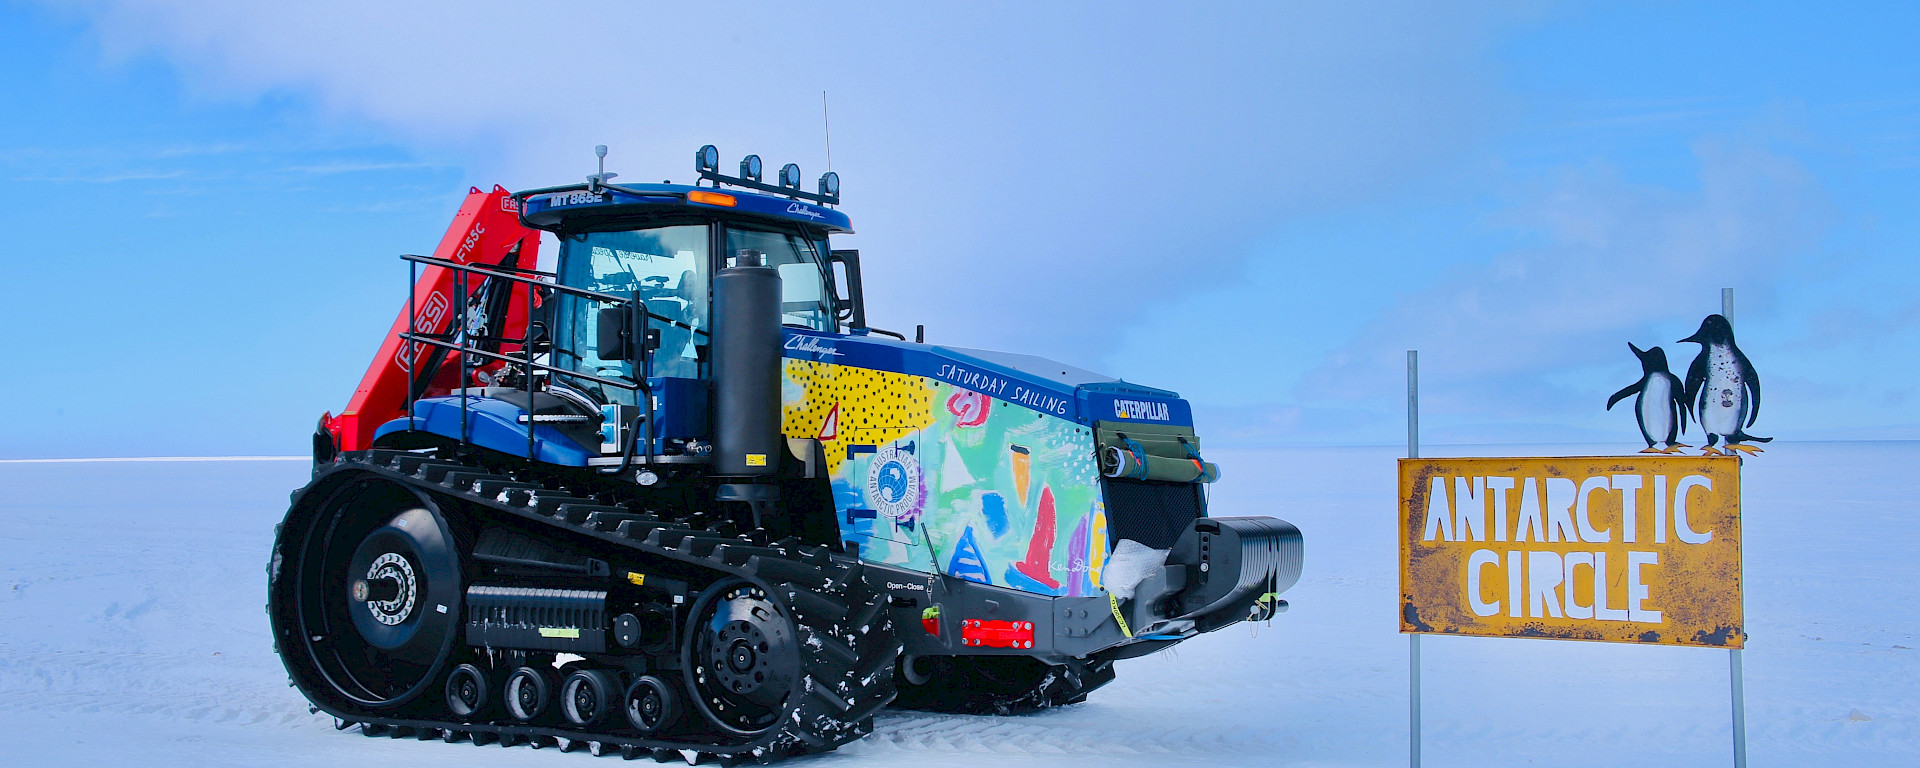 Tractor with artwork decal at Antarctic Circle